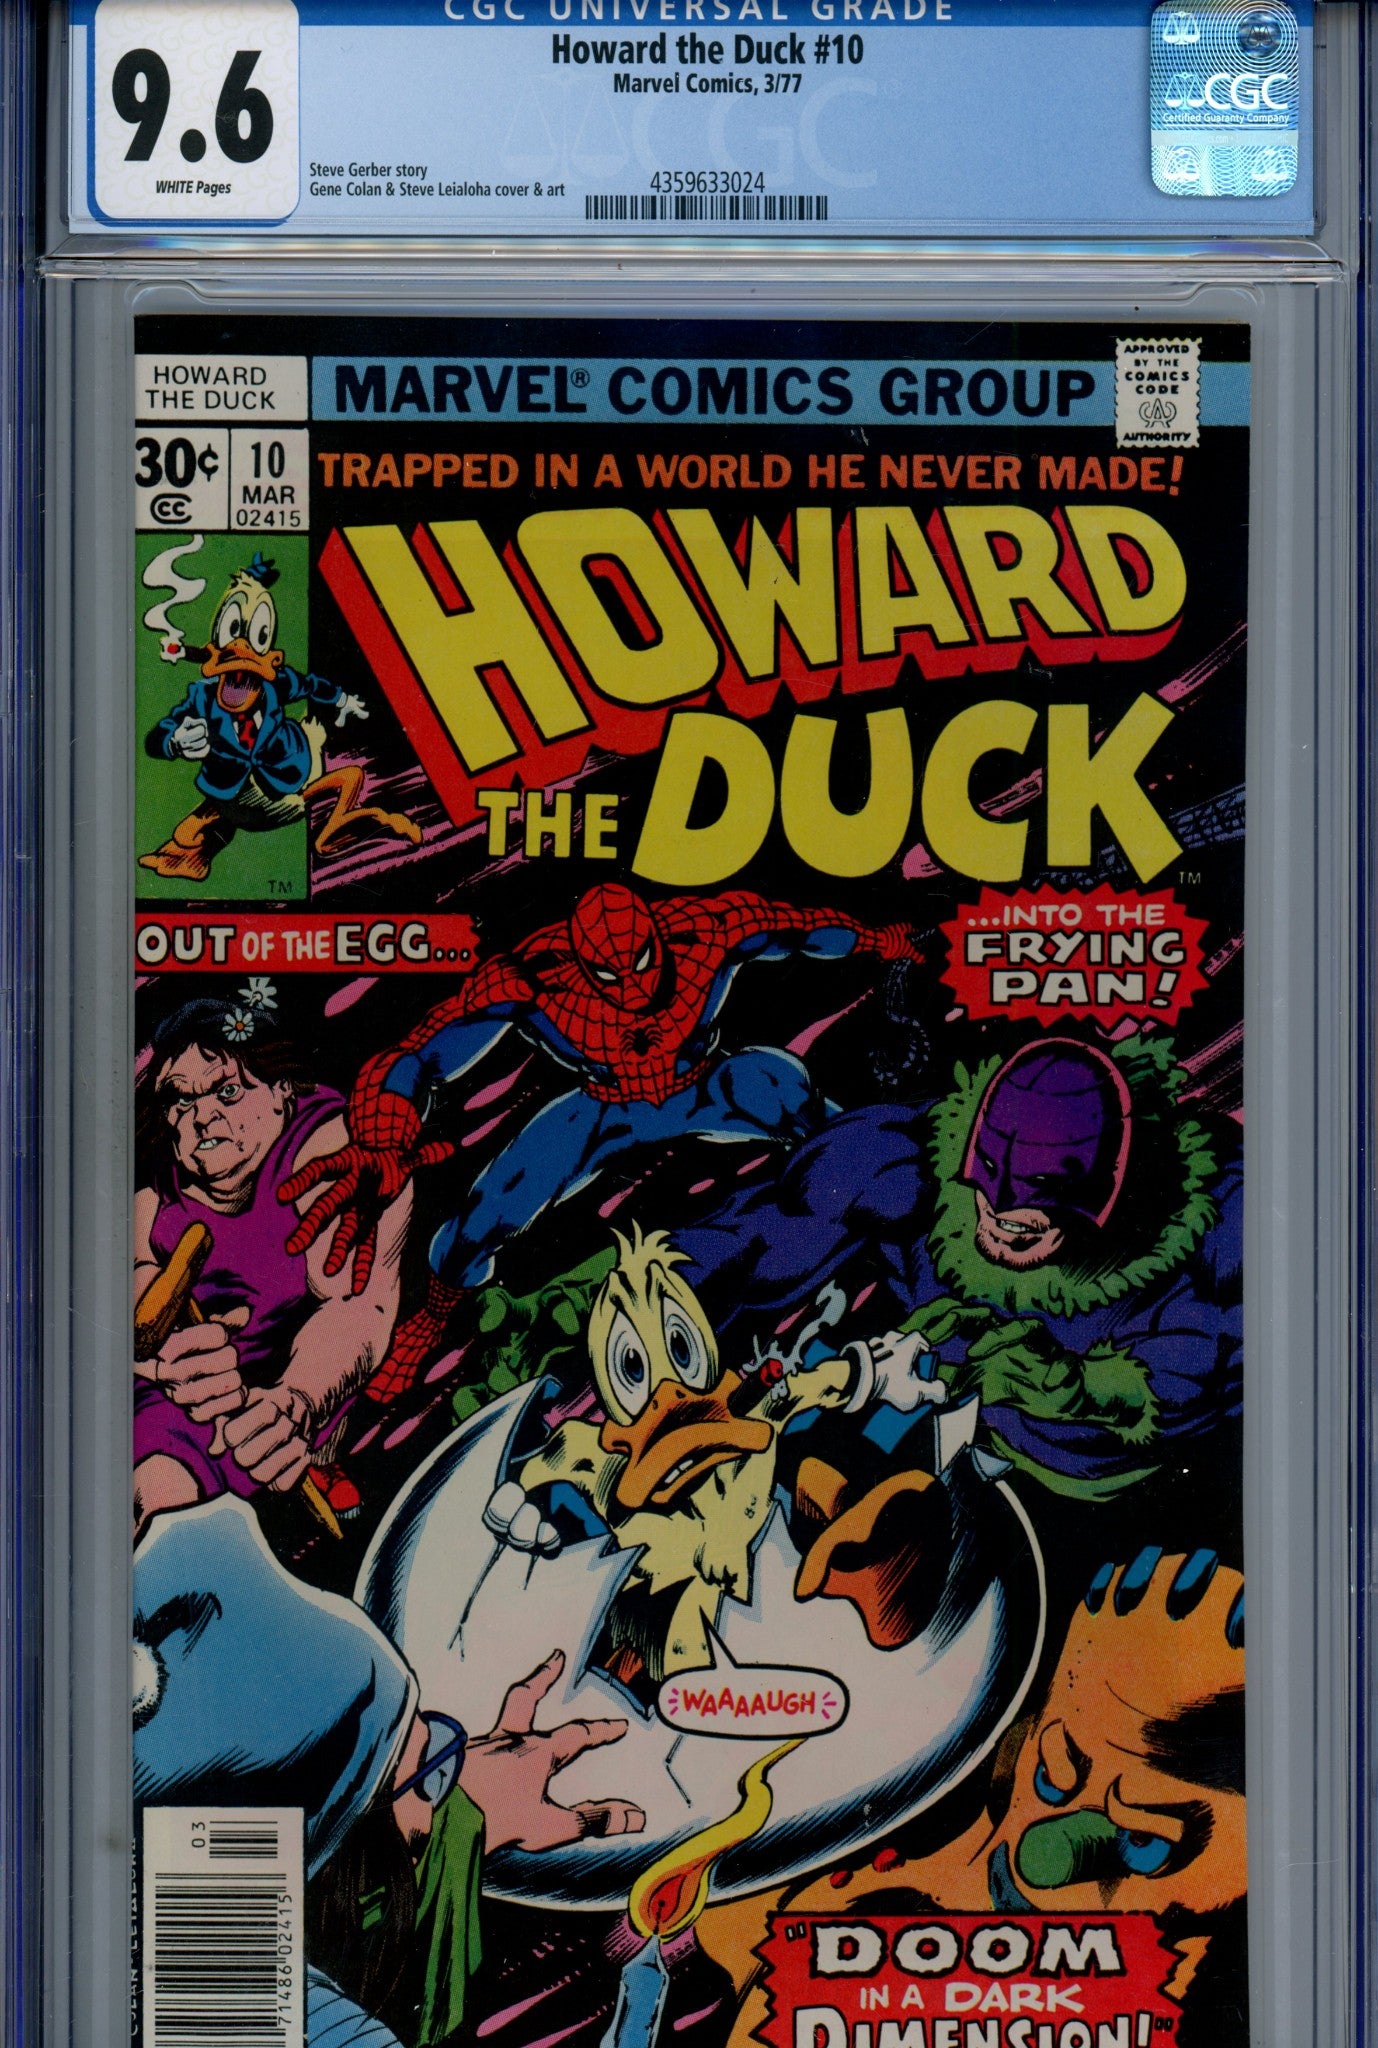 Howard the Duck Vol 1 10 CGC 9.6 (NM+) (1977) 